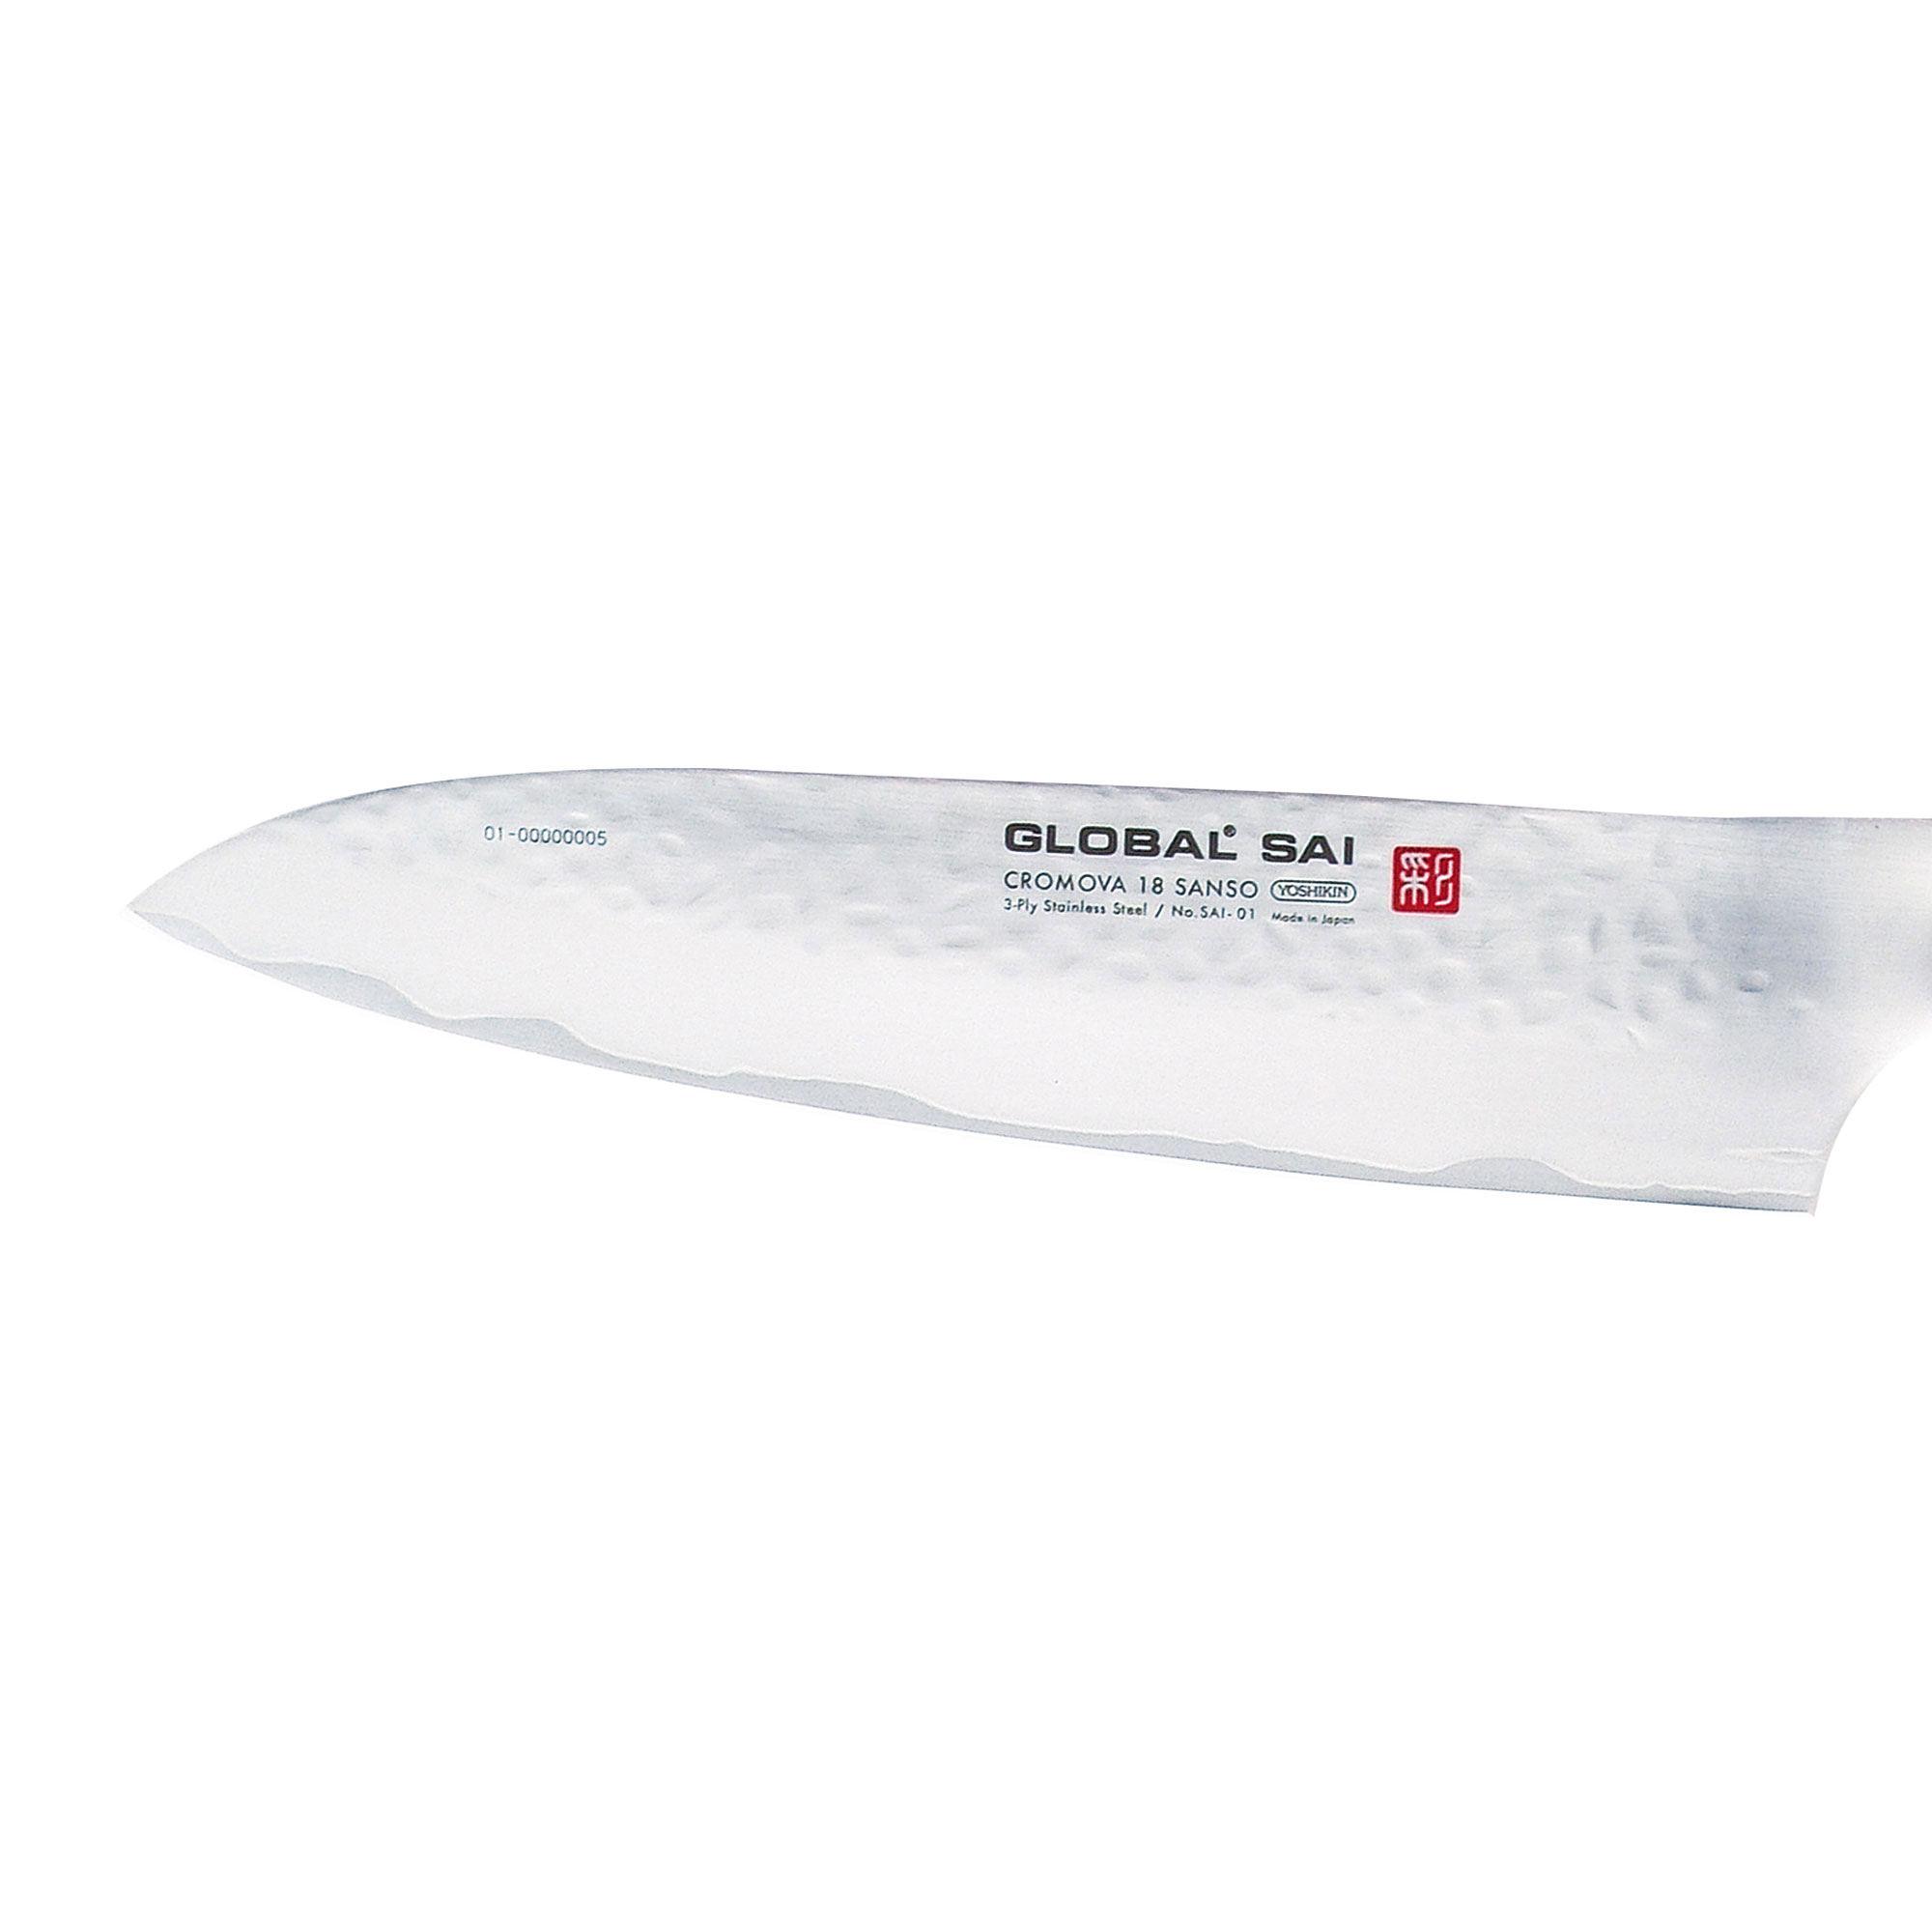 Global Sai Cook's Knife 19cm Image 2